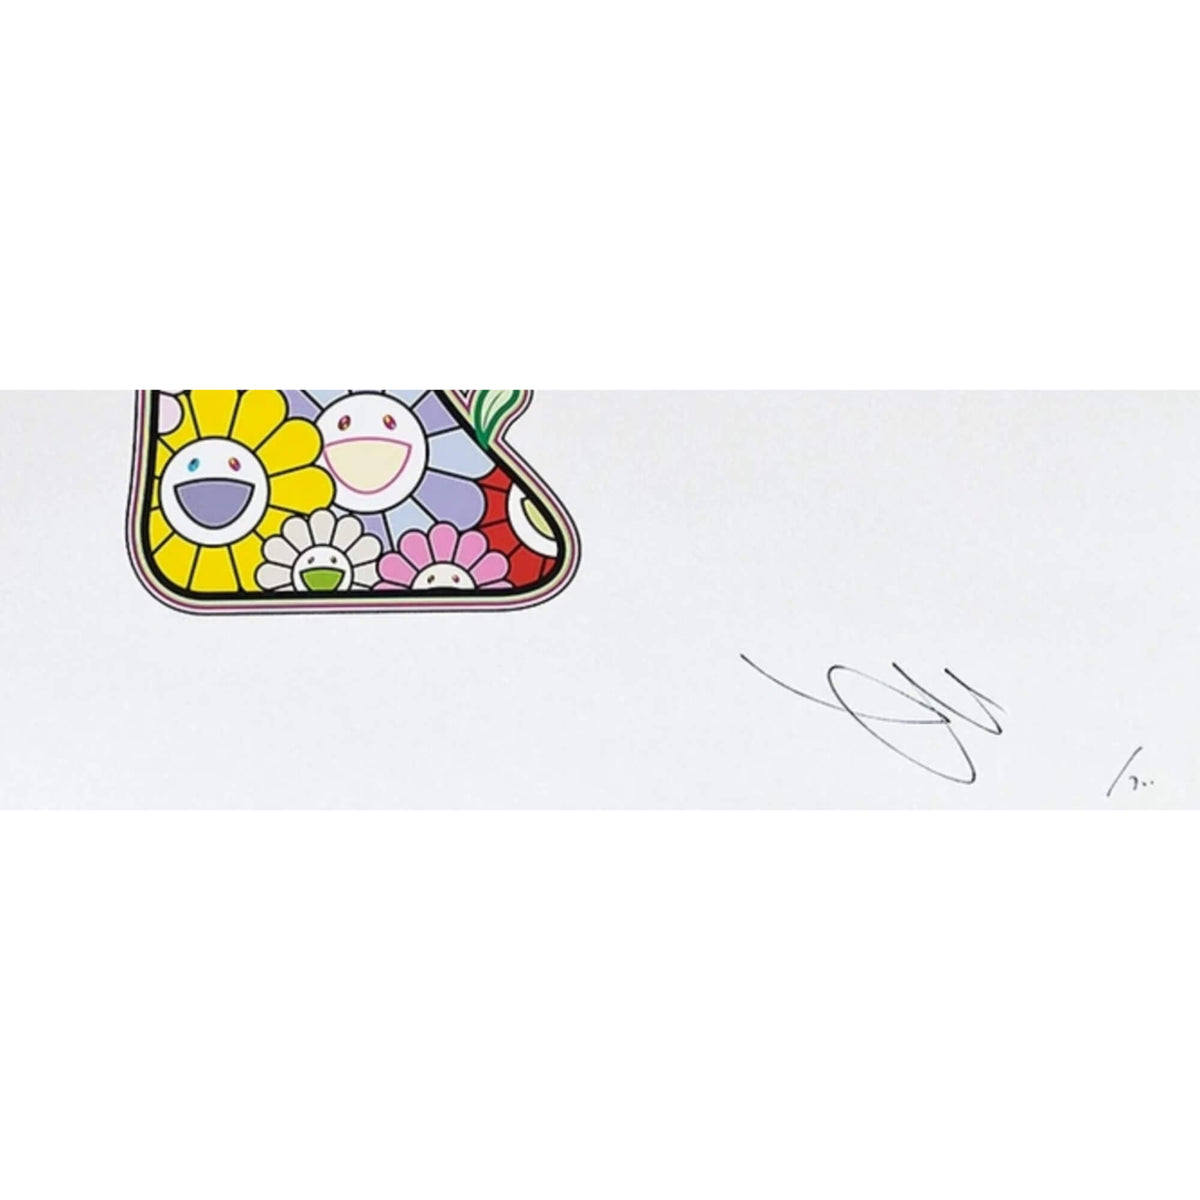 Takashi Murakami Flower Parent & Child Print (Signed, Edition of 100)